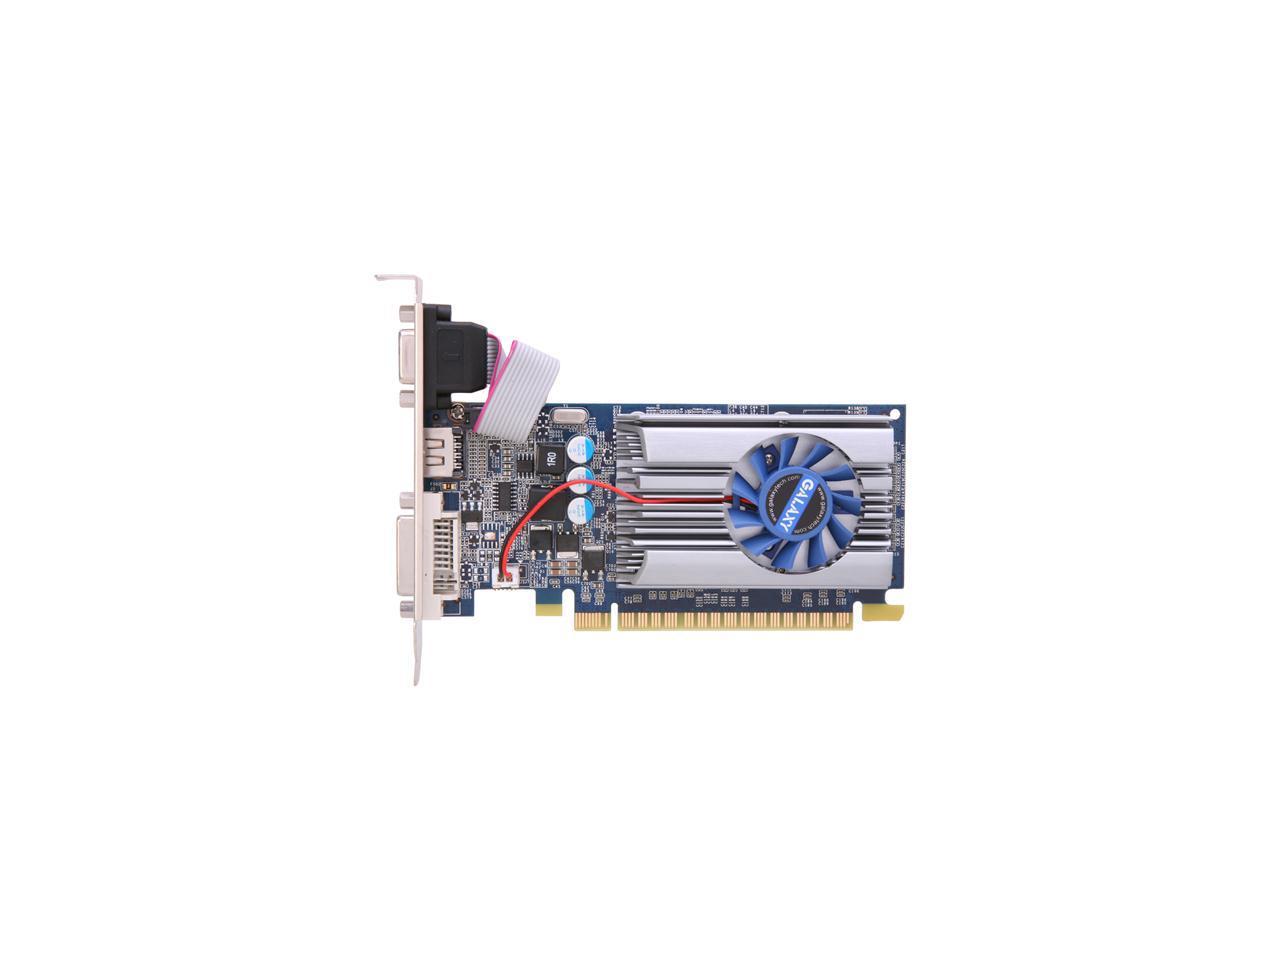 HDMI PCI-e Graphics Video Card DVI 1GB Galaxy nVidia GeForce GT520 VGA